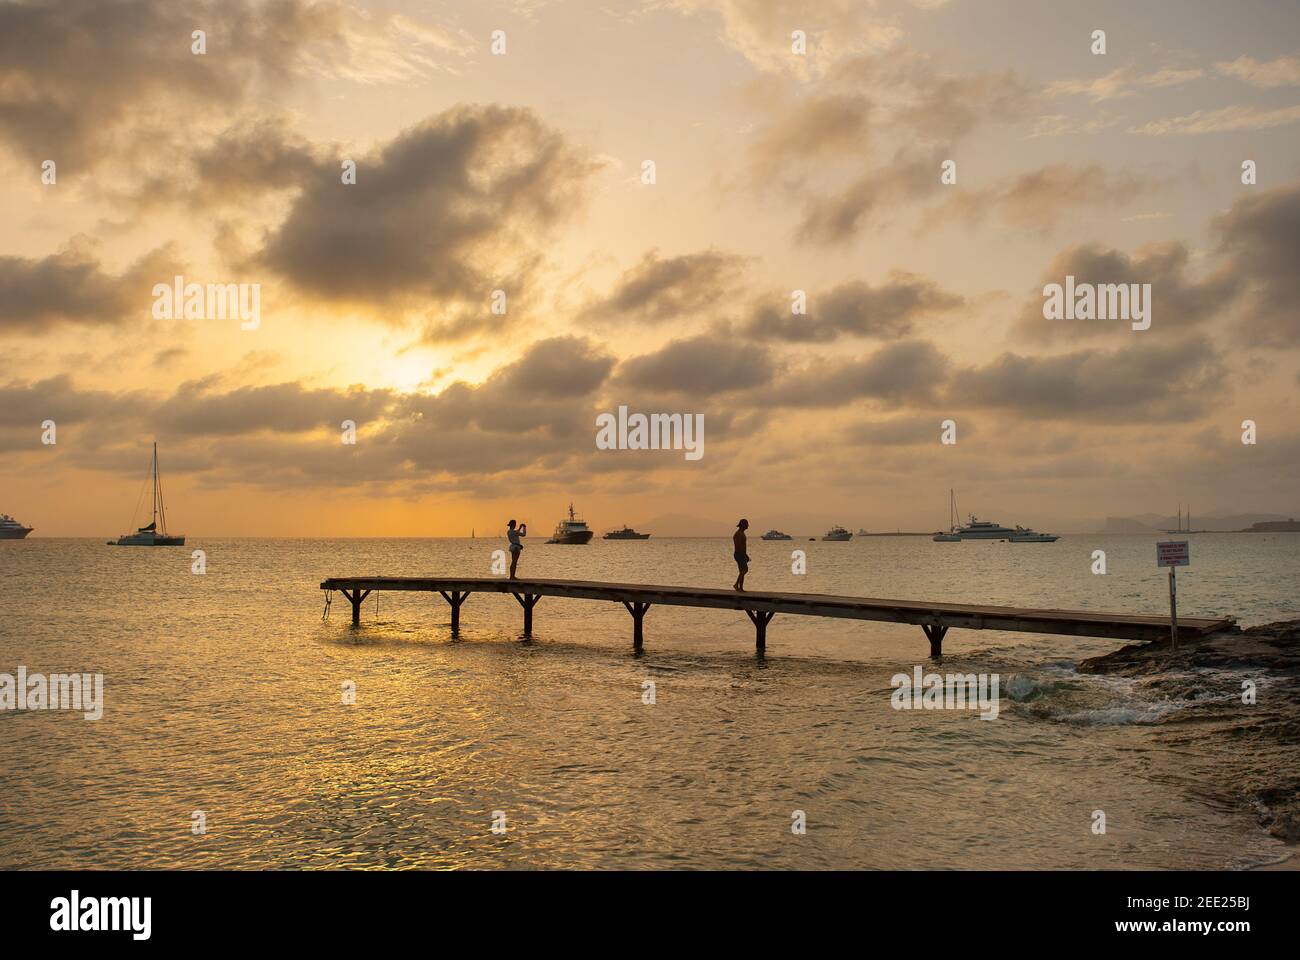 Jetty at sunset, Playa de ses illetes beach, Formentera, Balearics, Spain Stock Photo